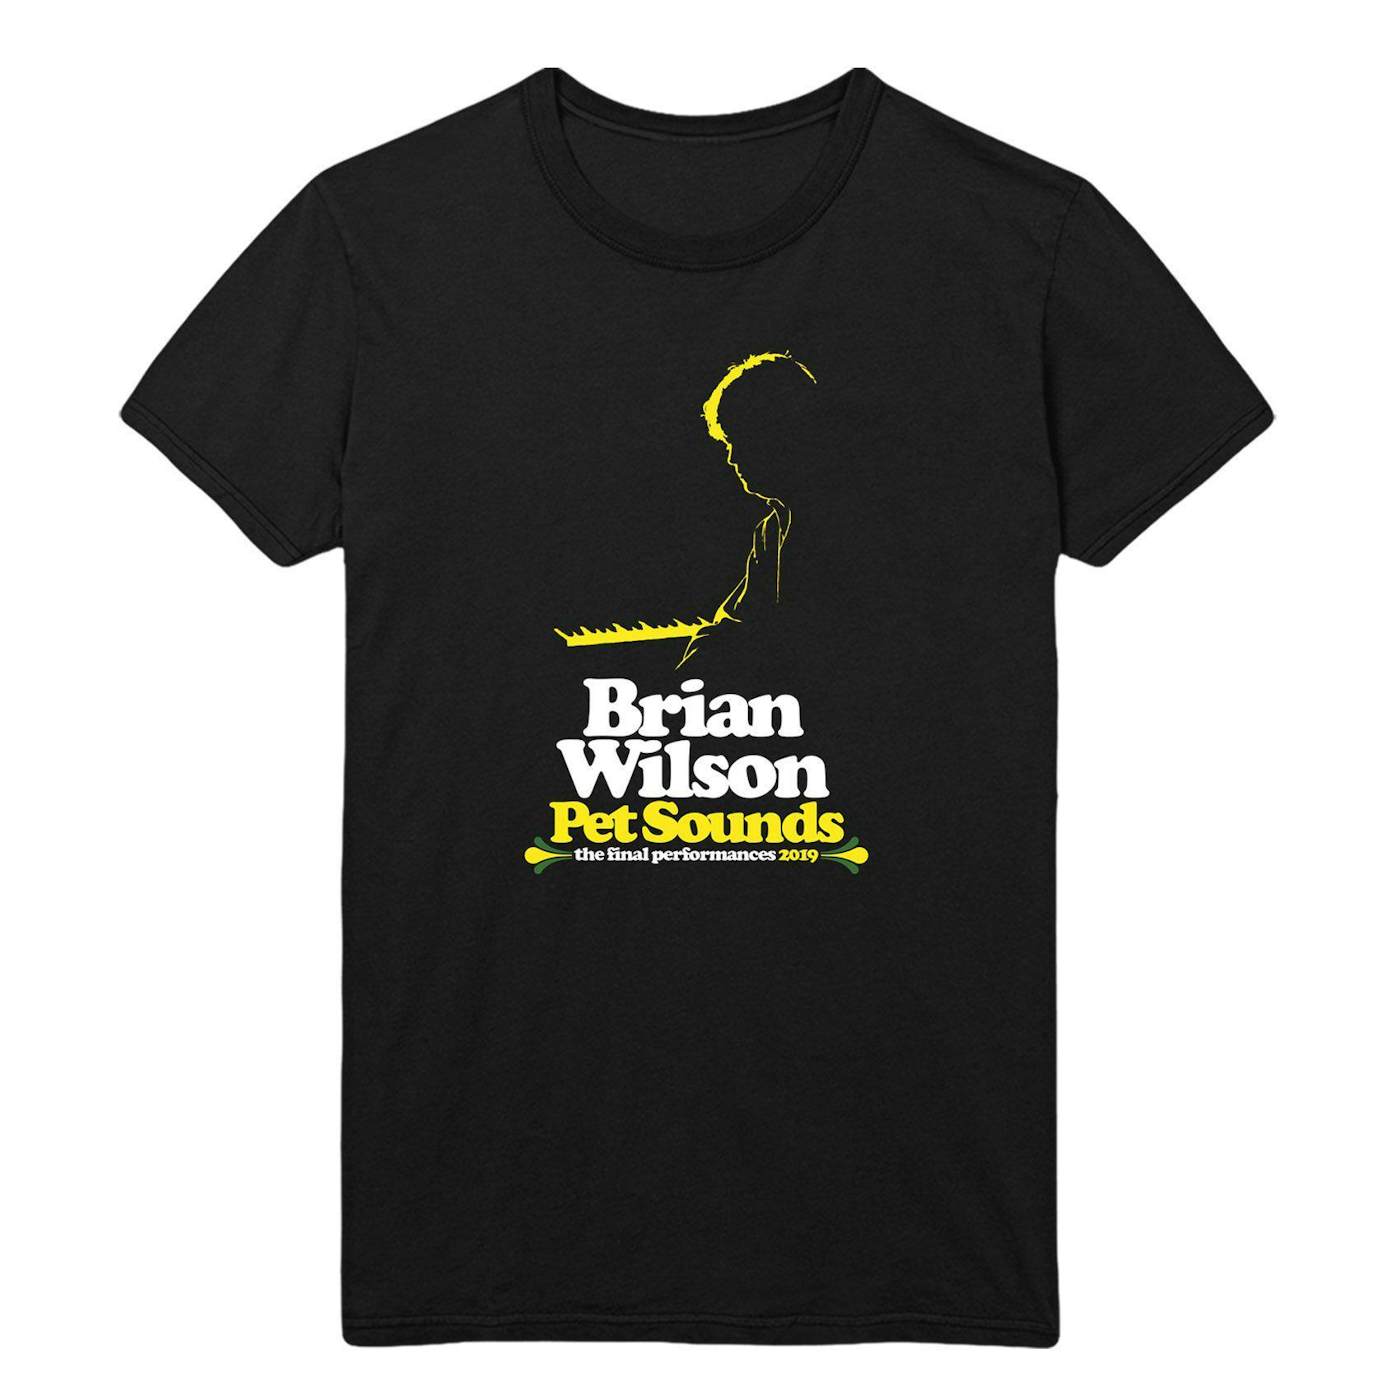 Brian Wilson Pet Sounds Silhouette Tee Tour 2019